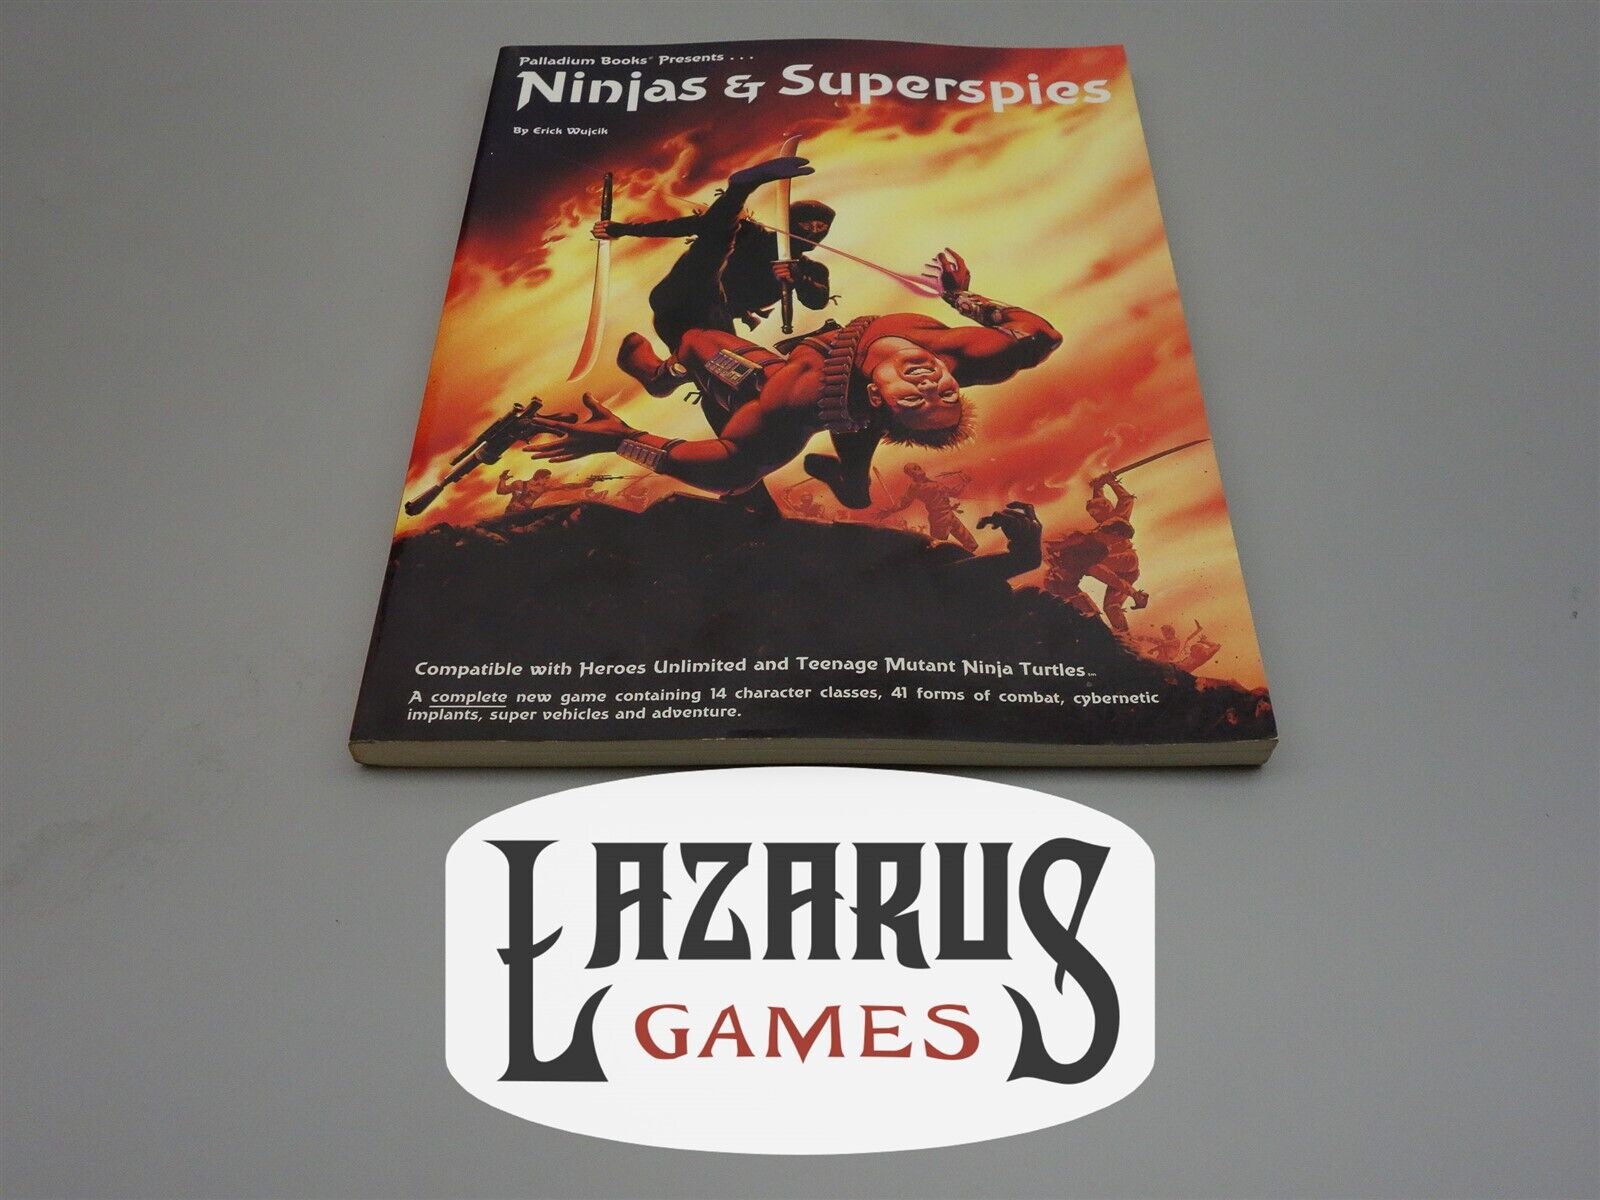 Palladium Fantasy Role-playing Game - Ninjas & Superspies (palladium Books)